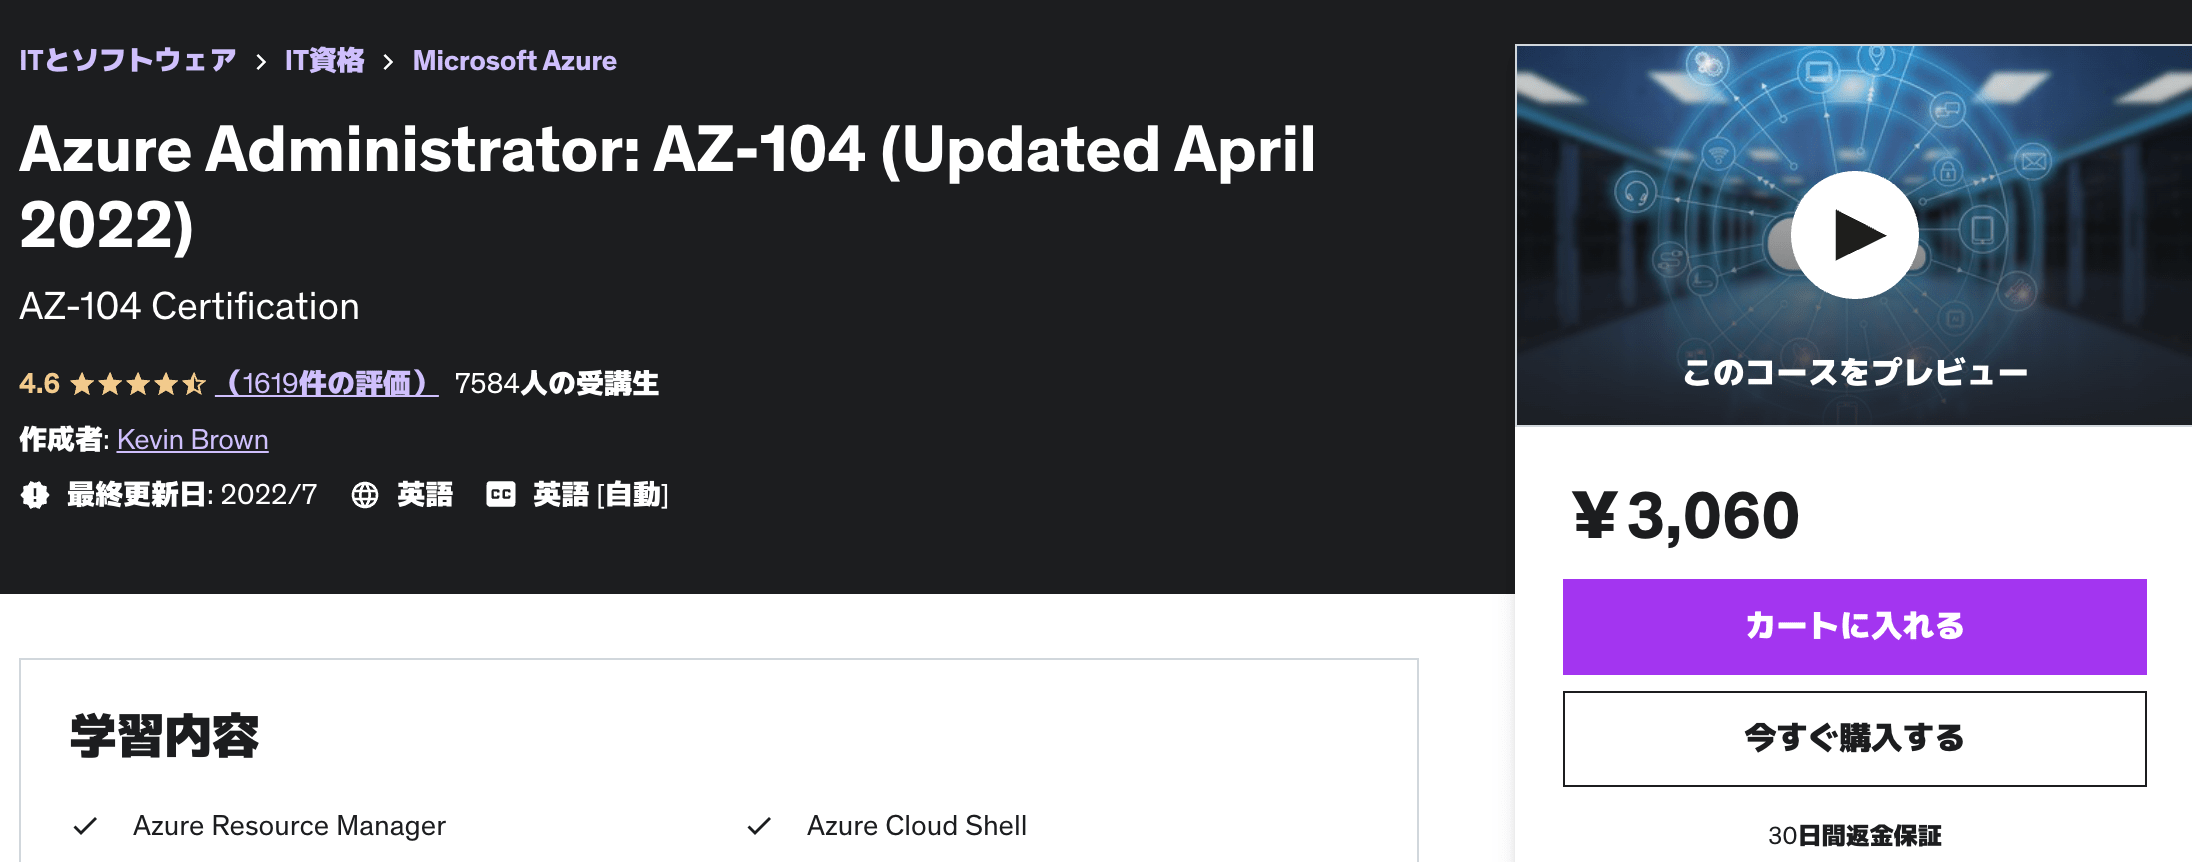 AZ-104: Microsoft Azure Administrator 模擬問題集